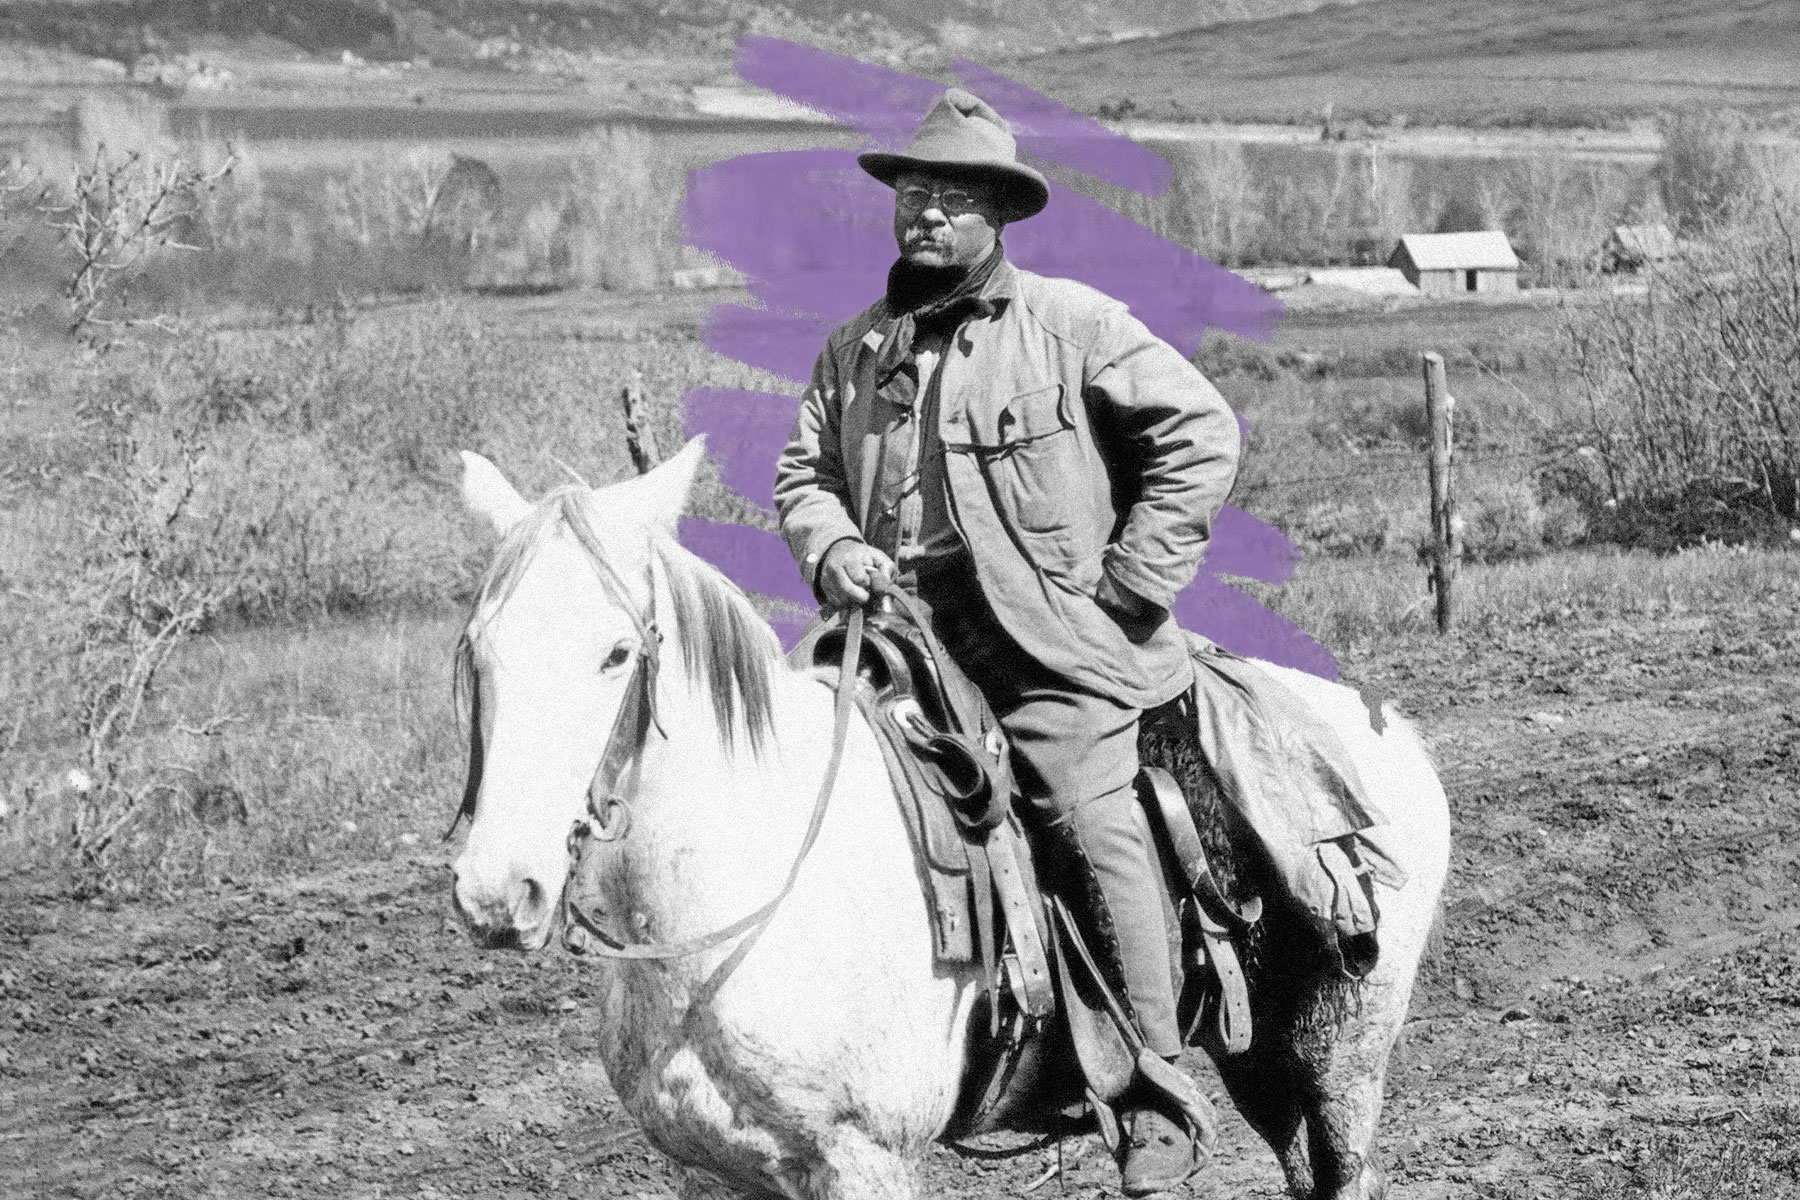 Roosevelt on horseback